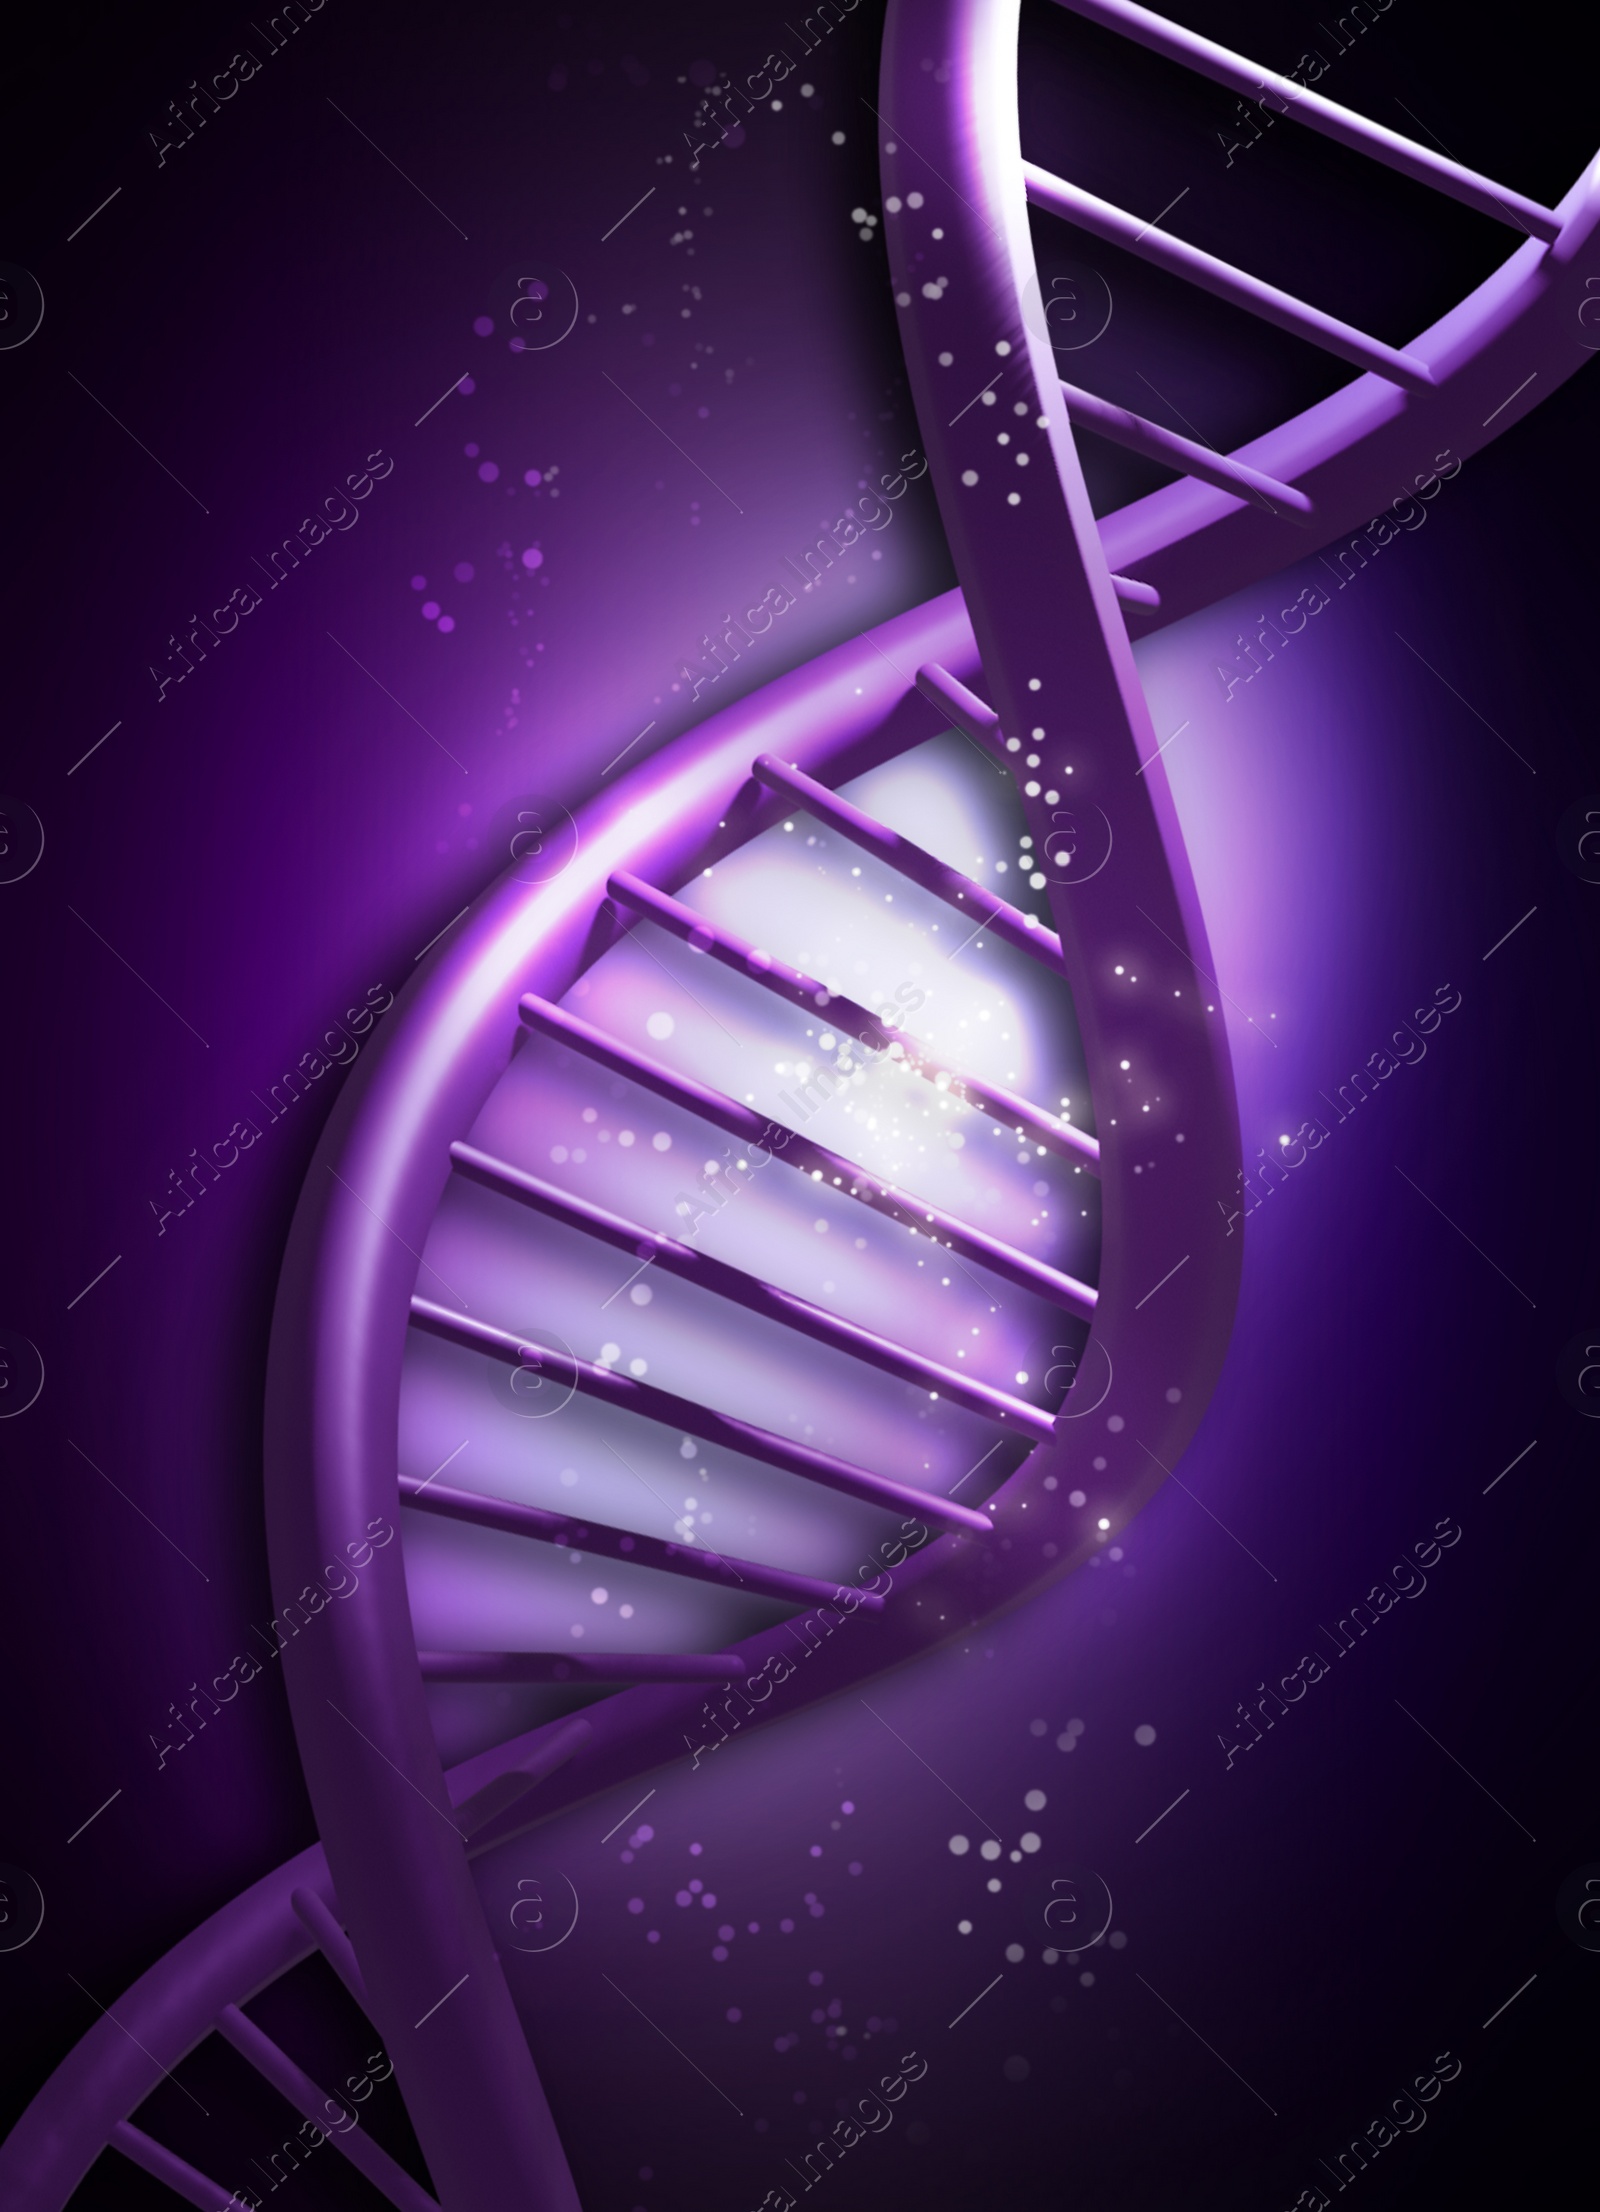 Illustration of Structure of DNA on color background. Illustration